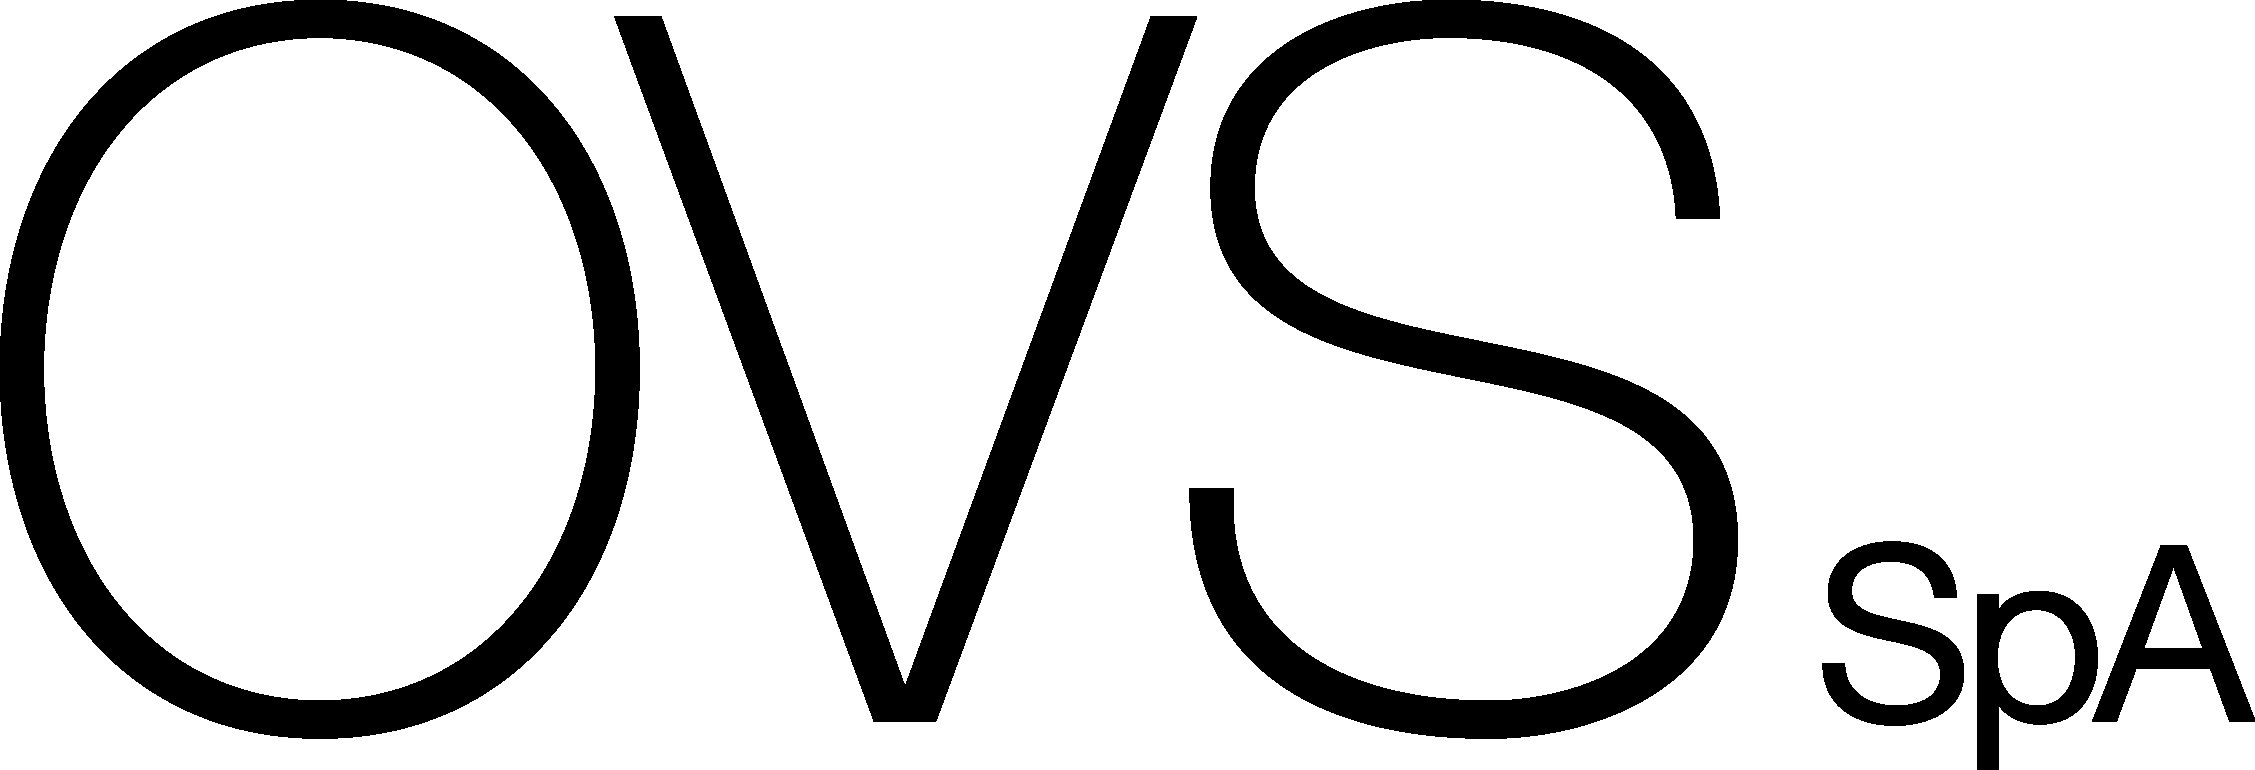 OVS SPA Logo 1